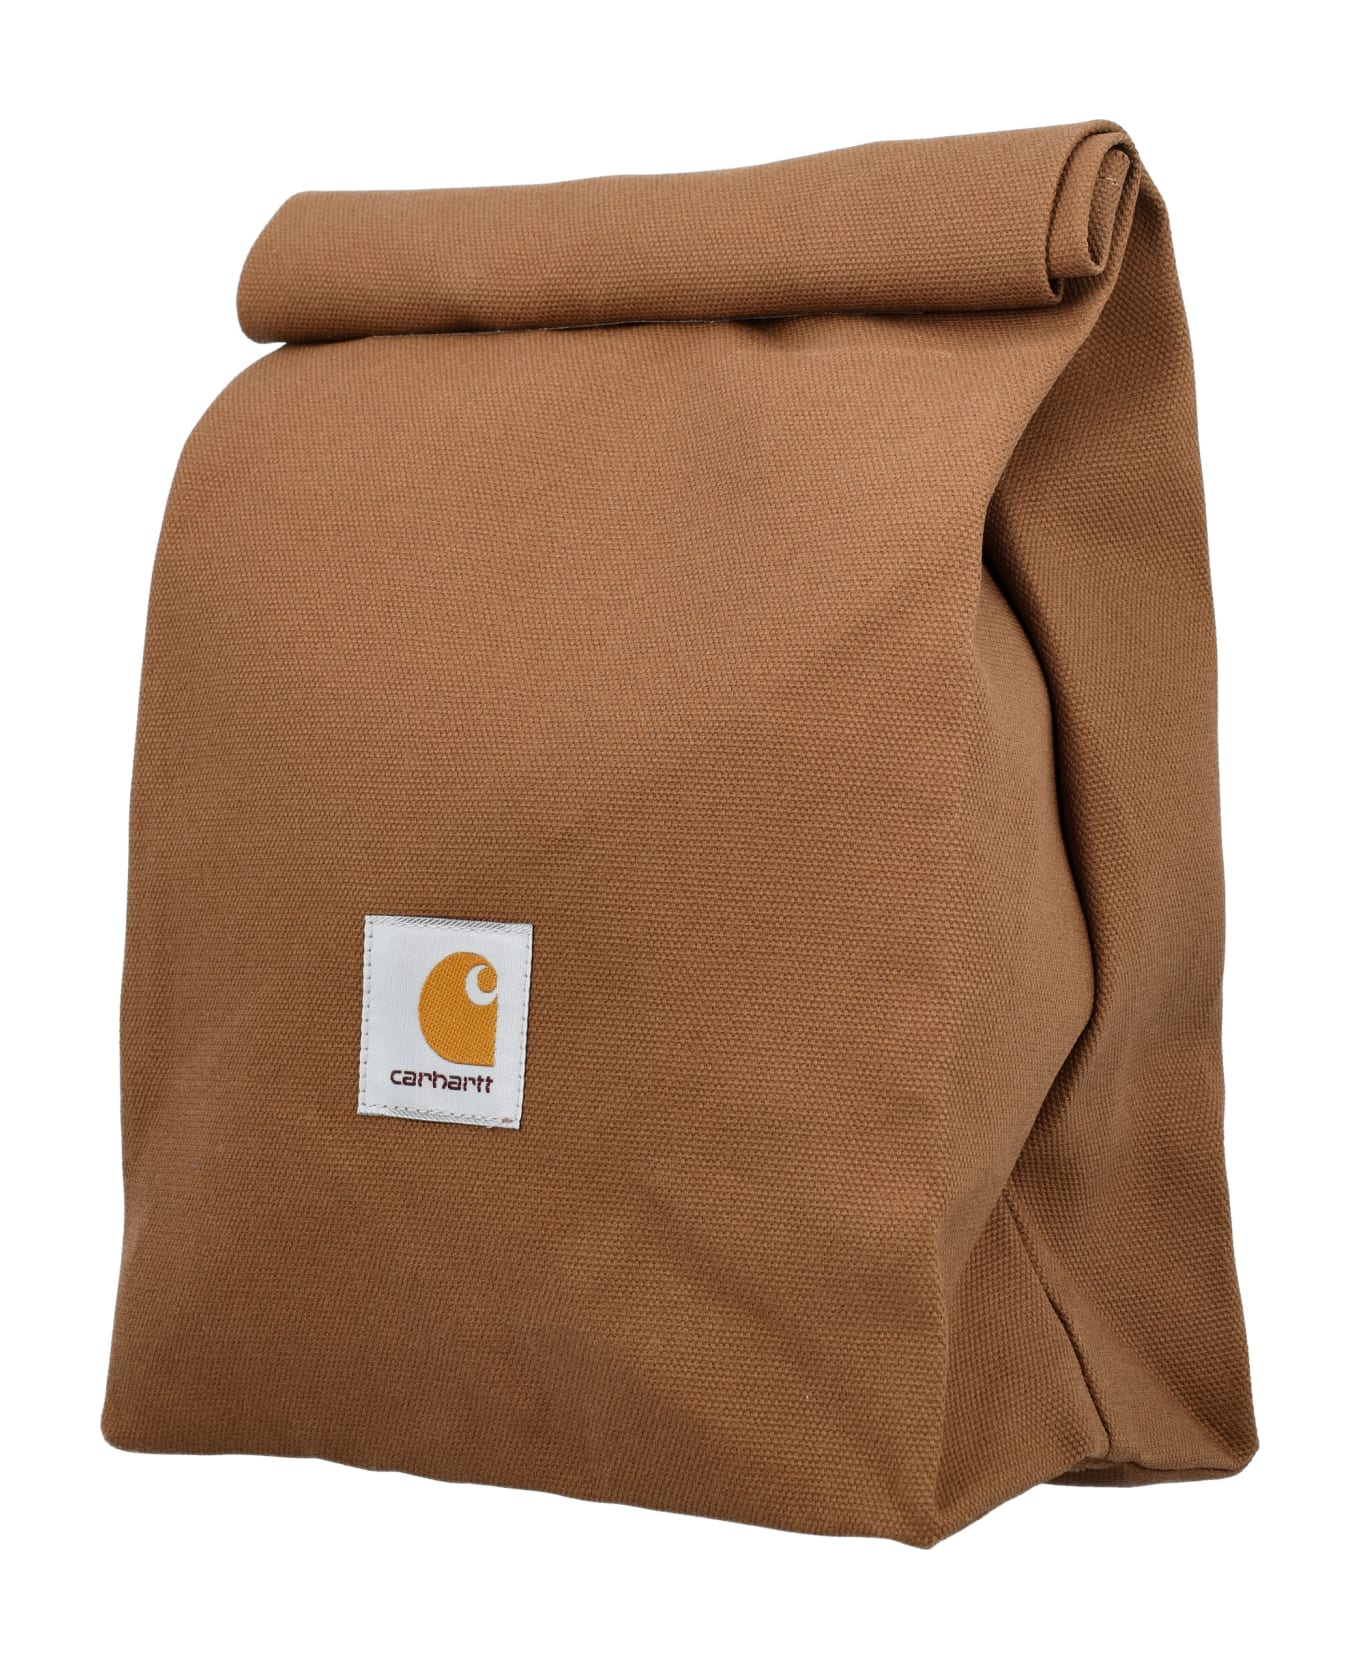 Carhartt Lunch Bag - HAMILTON BROWN